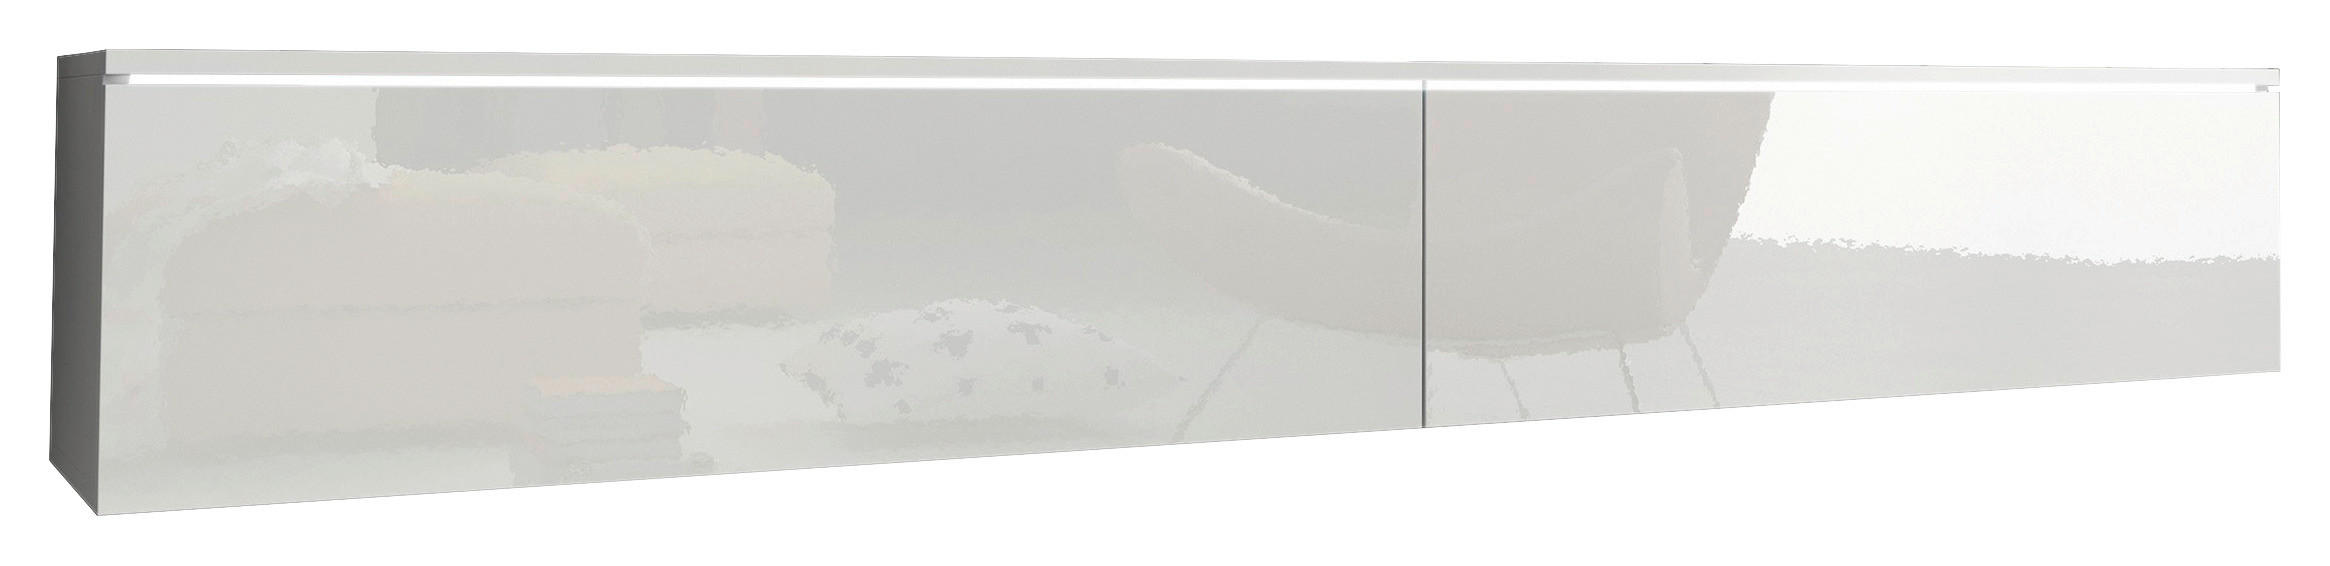 LOWBOARD Weiß Hochglanz  - Weiß Hochglanz/Weiß, LIFESTYLE, Kunststoff (180/30/33cm) - P & B